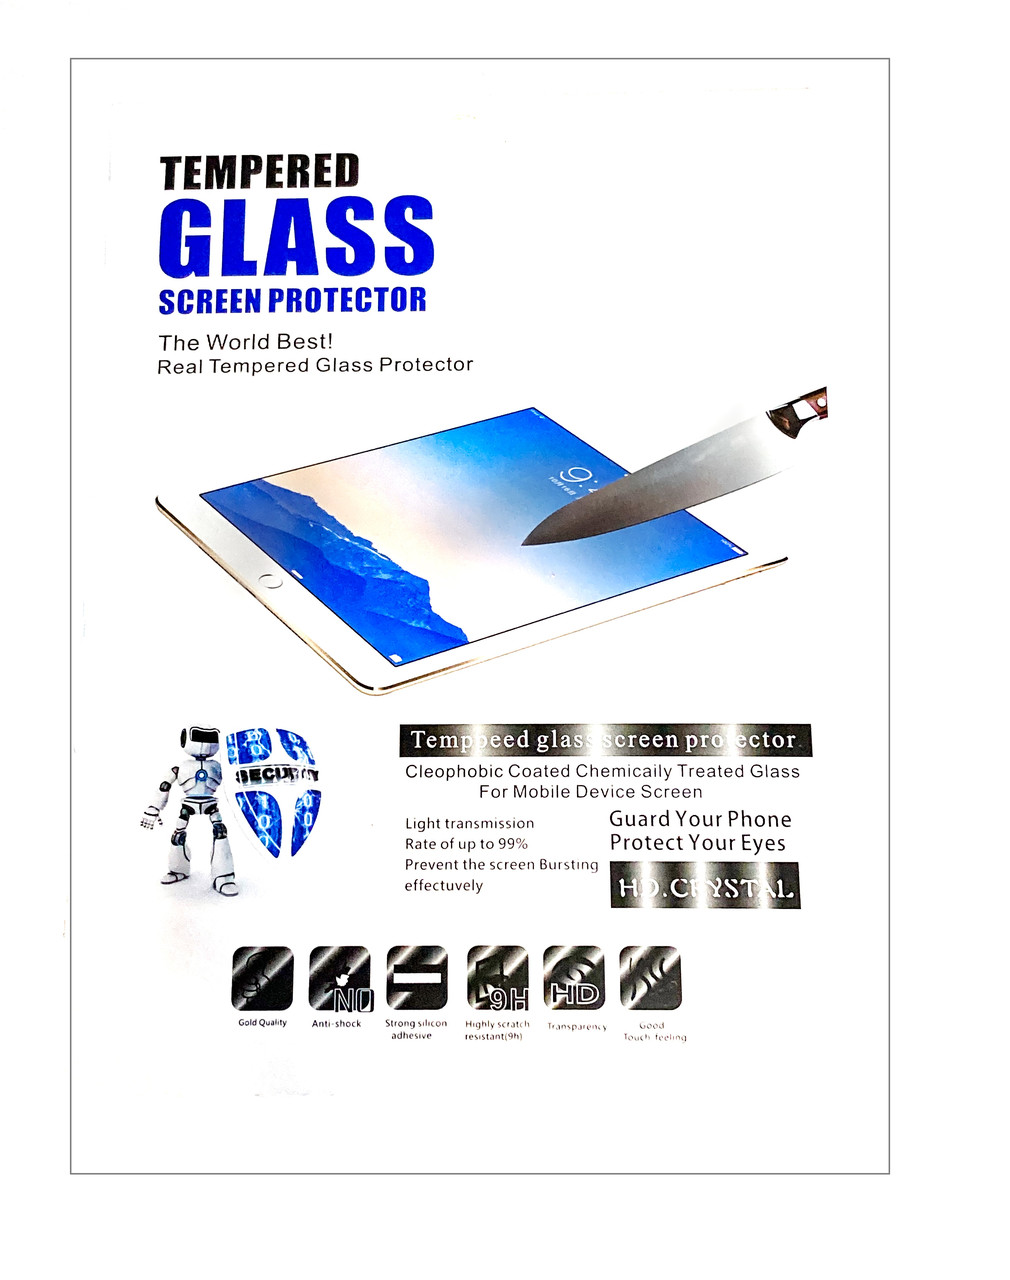 Защитное стекло для планшета Samsung Galaxy Tab A 10.1 (T515)